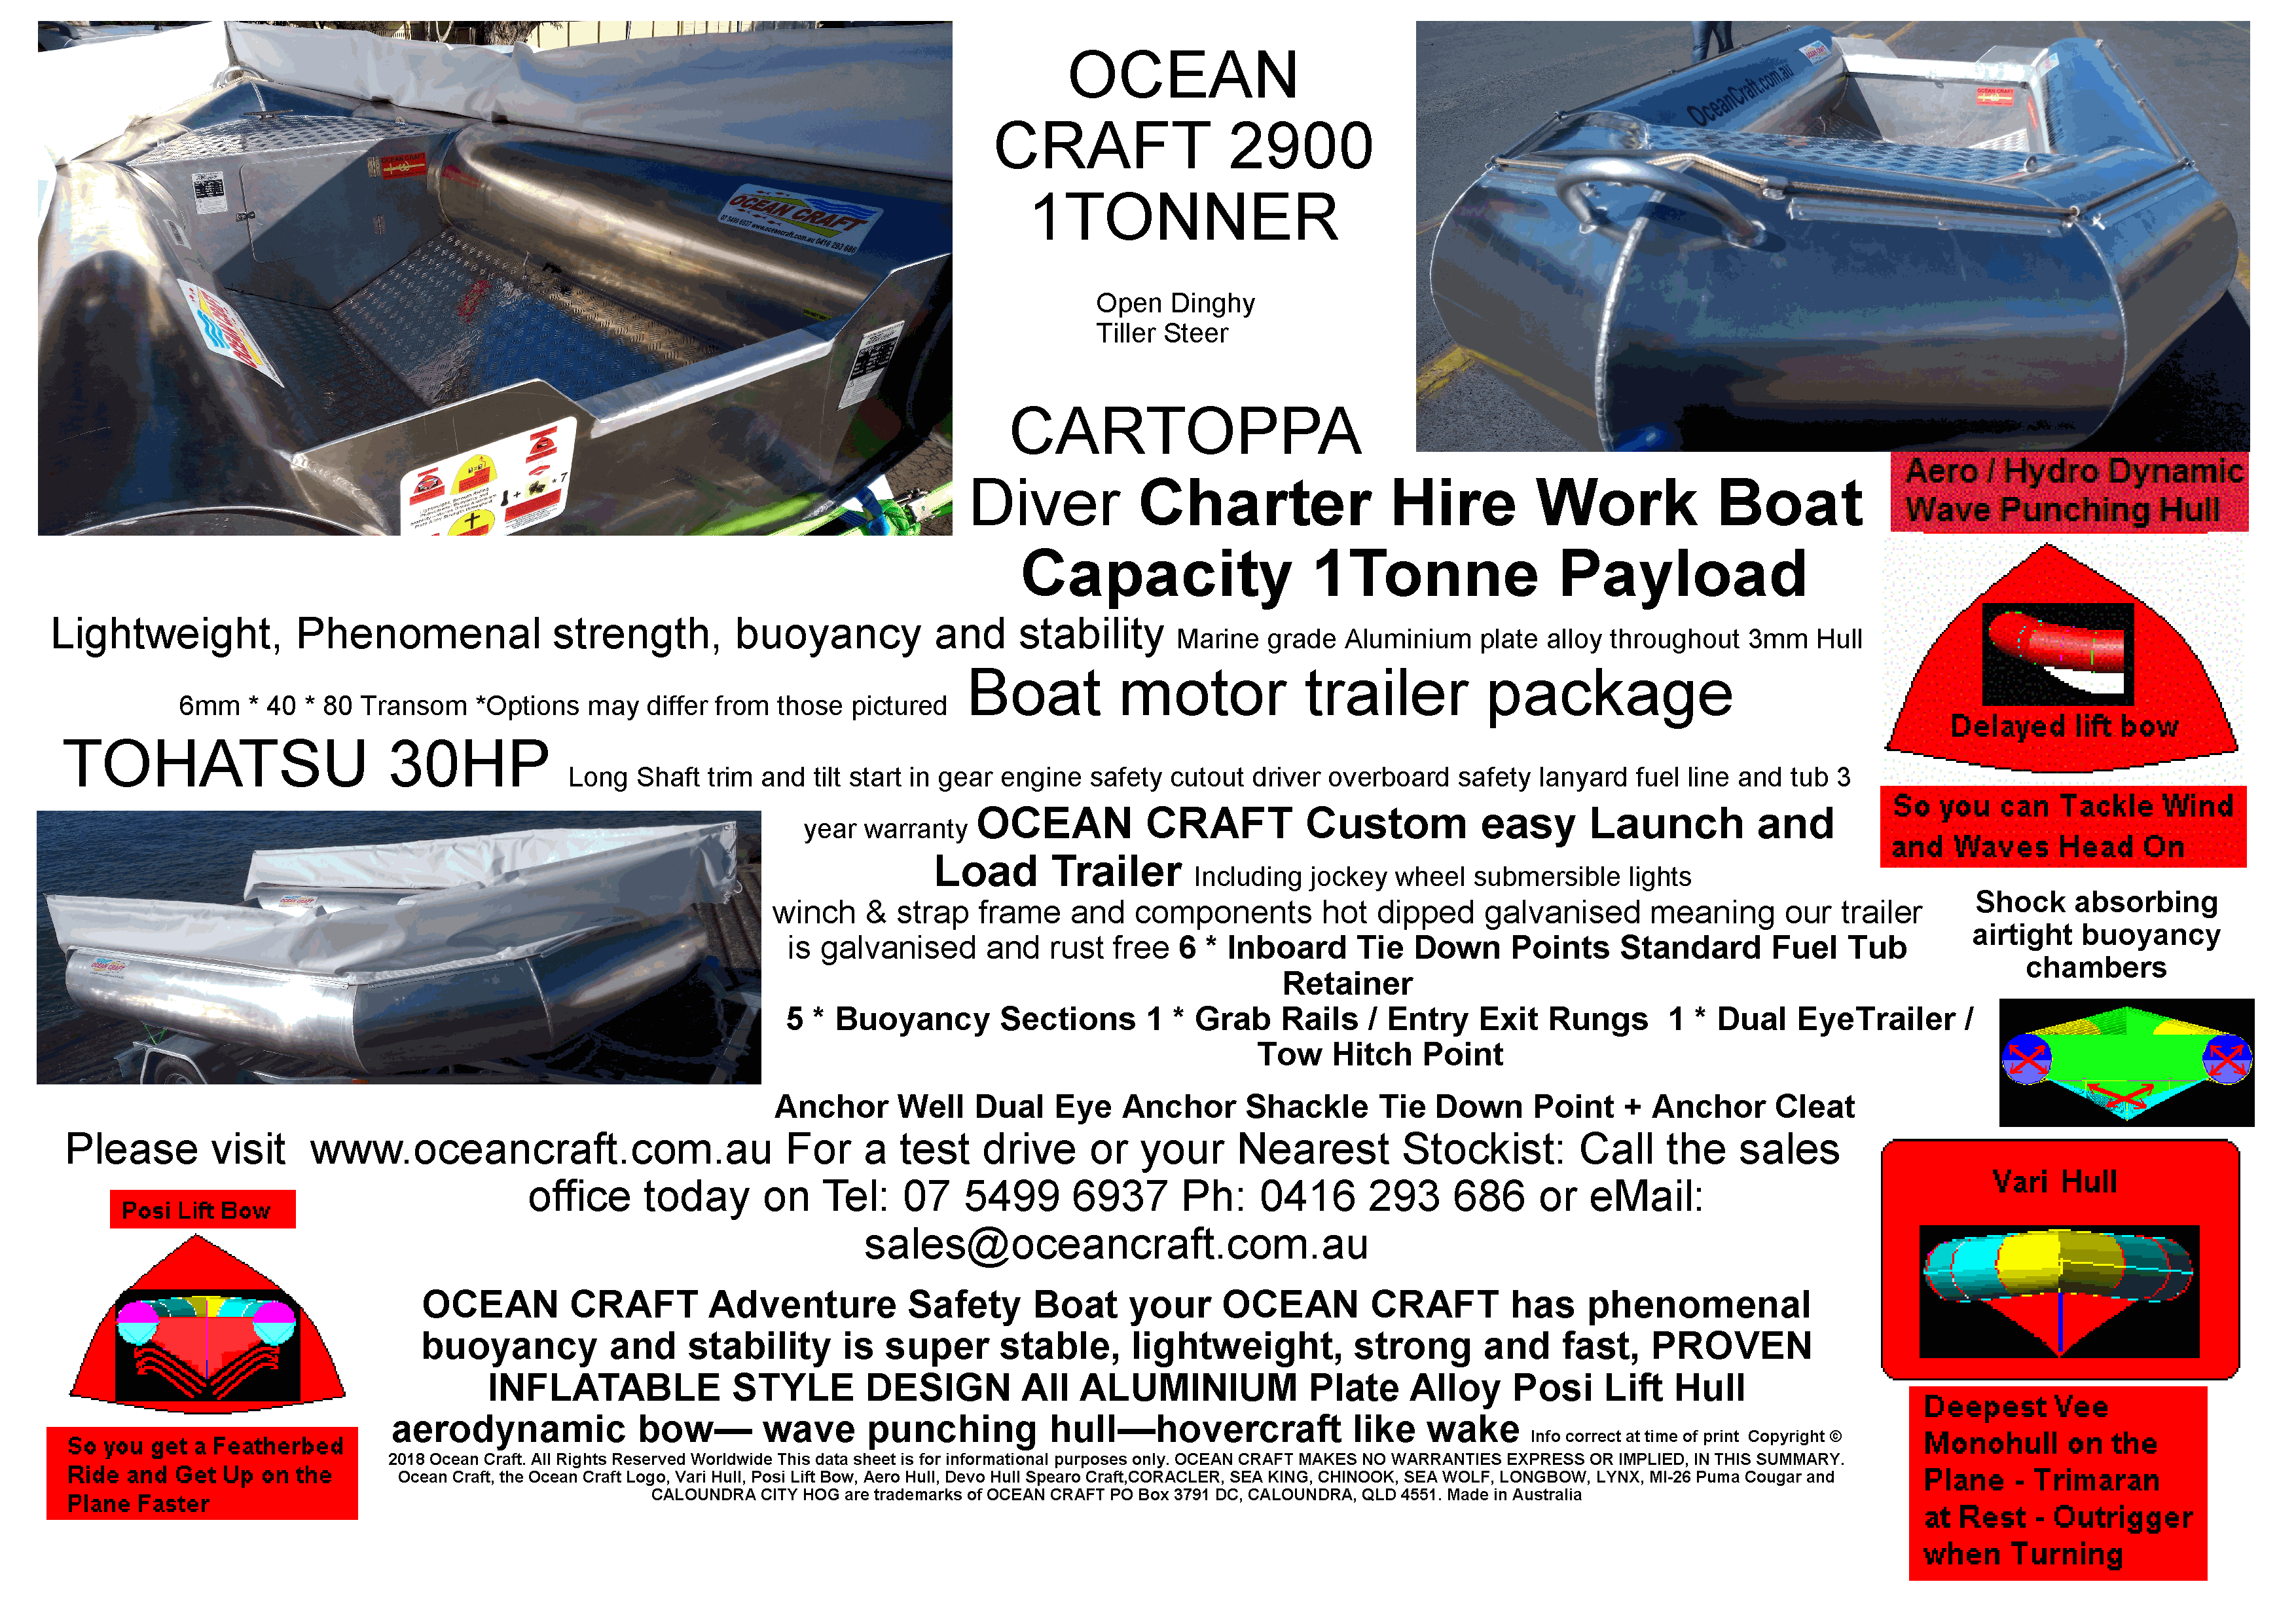 OCEAN CRAFT 2900 Spearo Craft